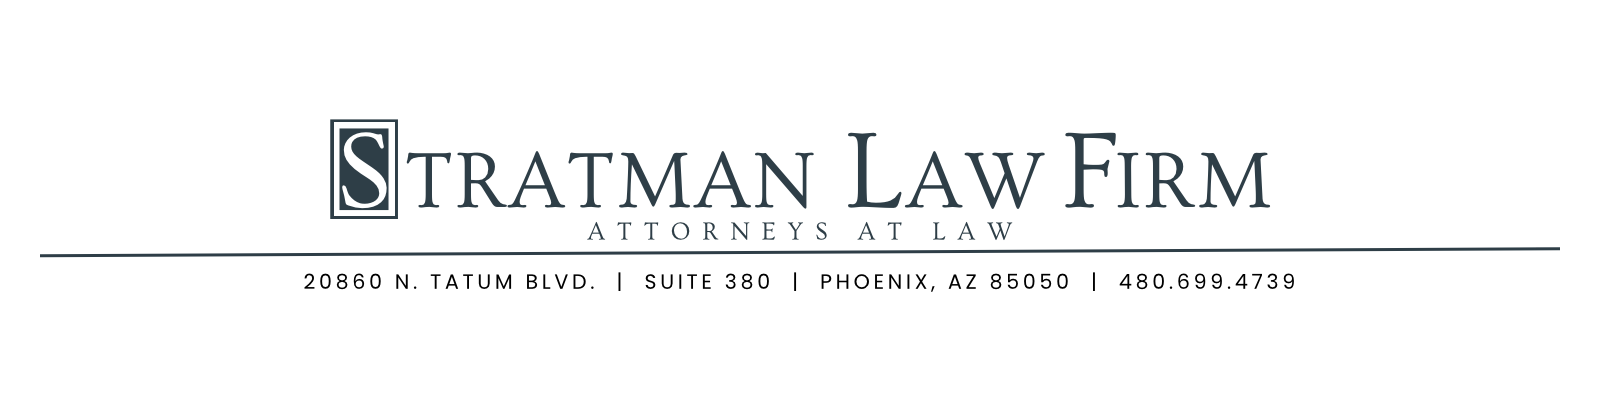 Stratman Law Firm